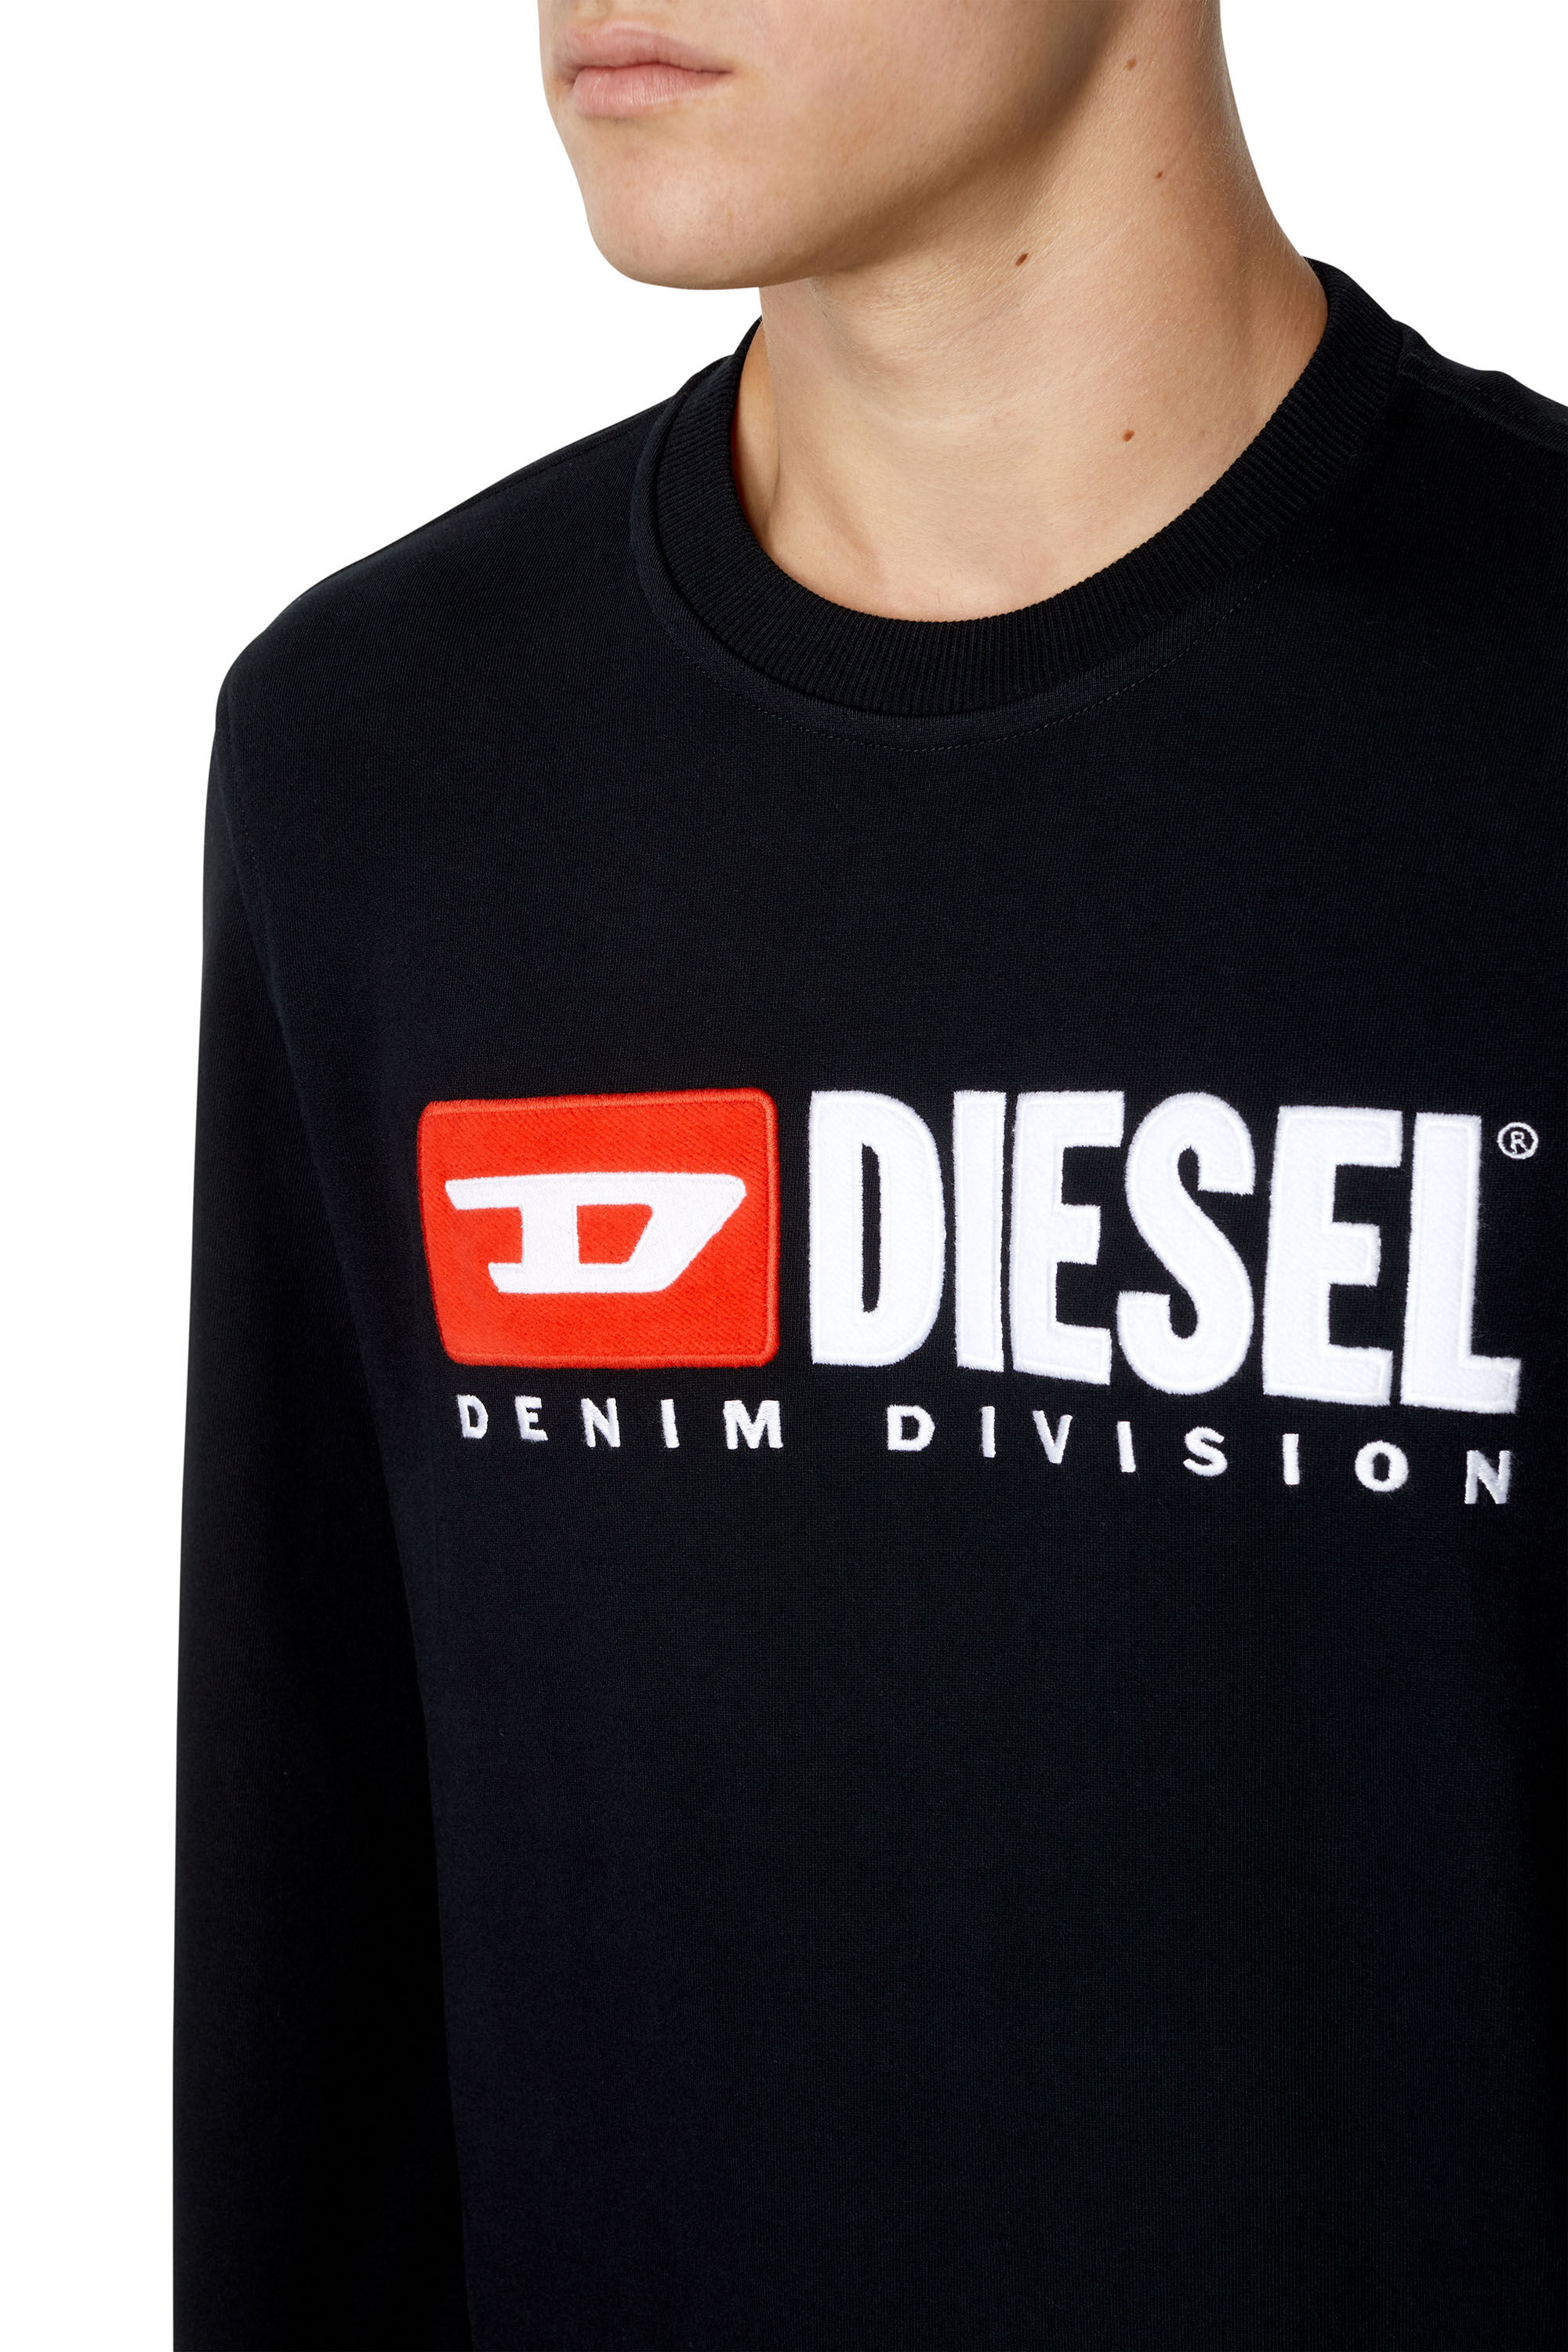 Diesel - S-GINN-DIV, Black - Image 6